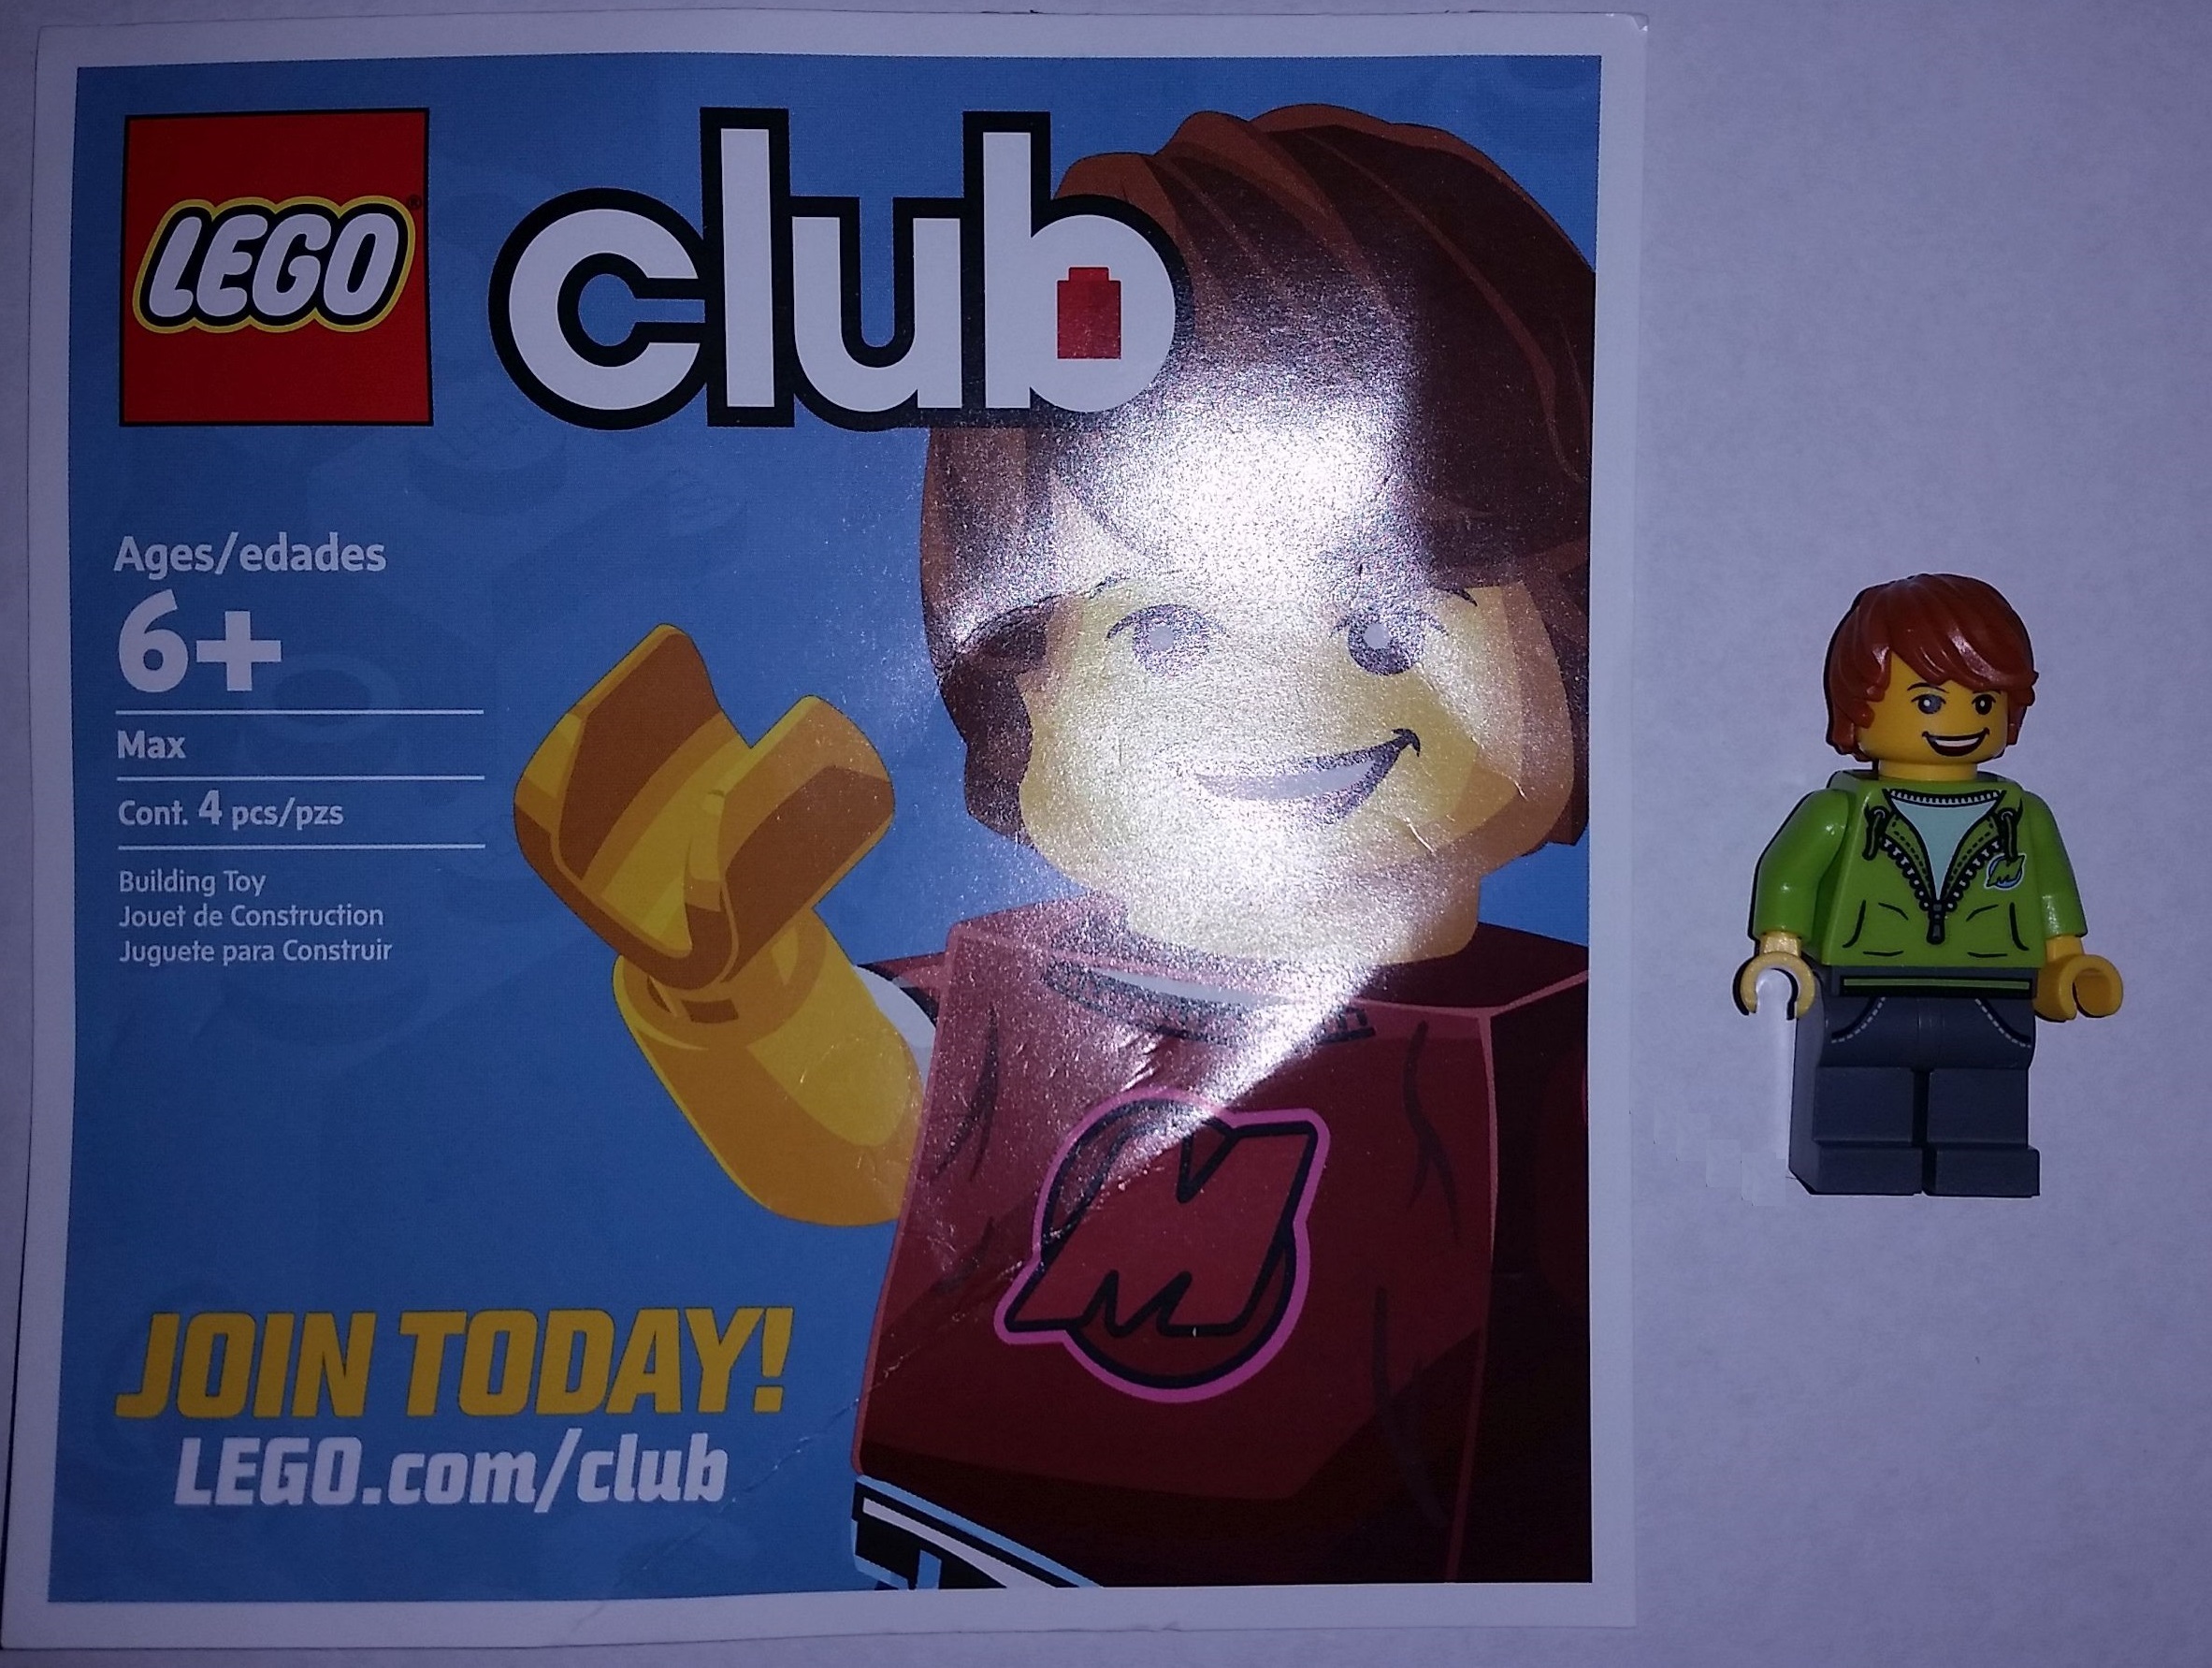 New Max Lego Club Minifigure KidsFest 2014 in USA - Minifigure Price Guide